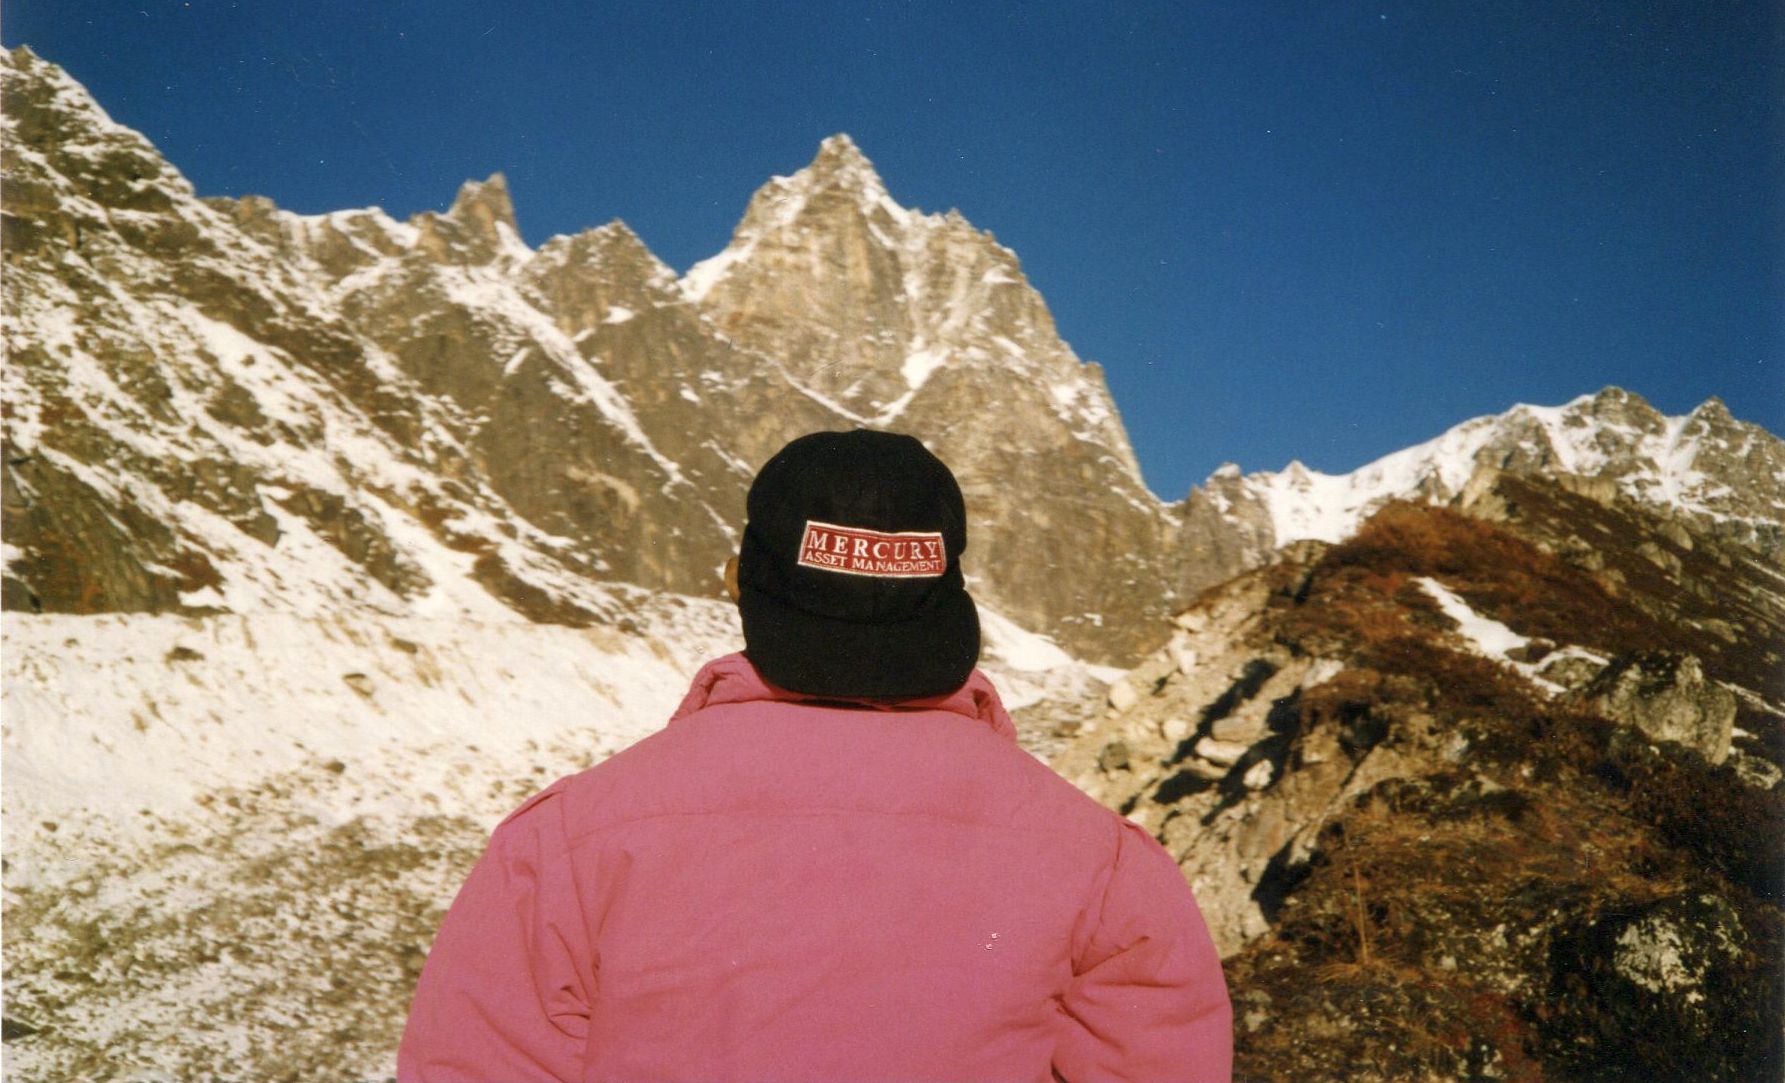 Balephi Glacier in the Jugal Himal